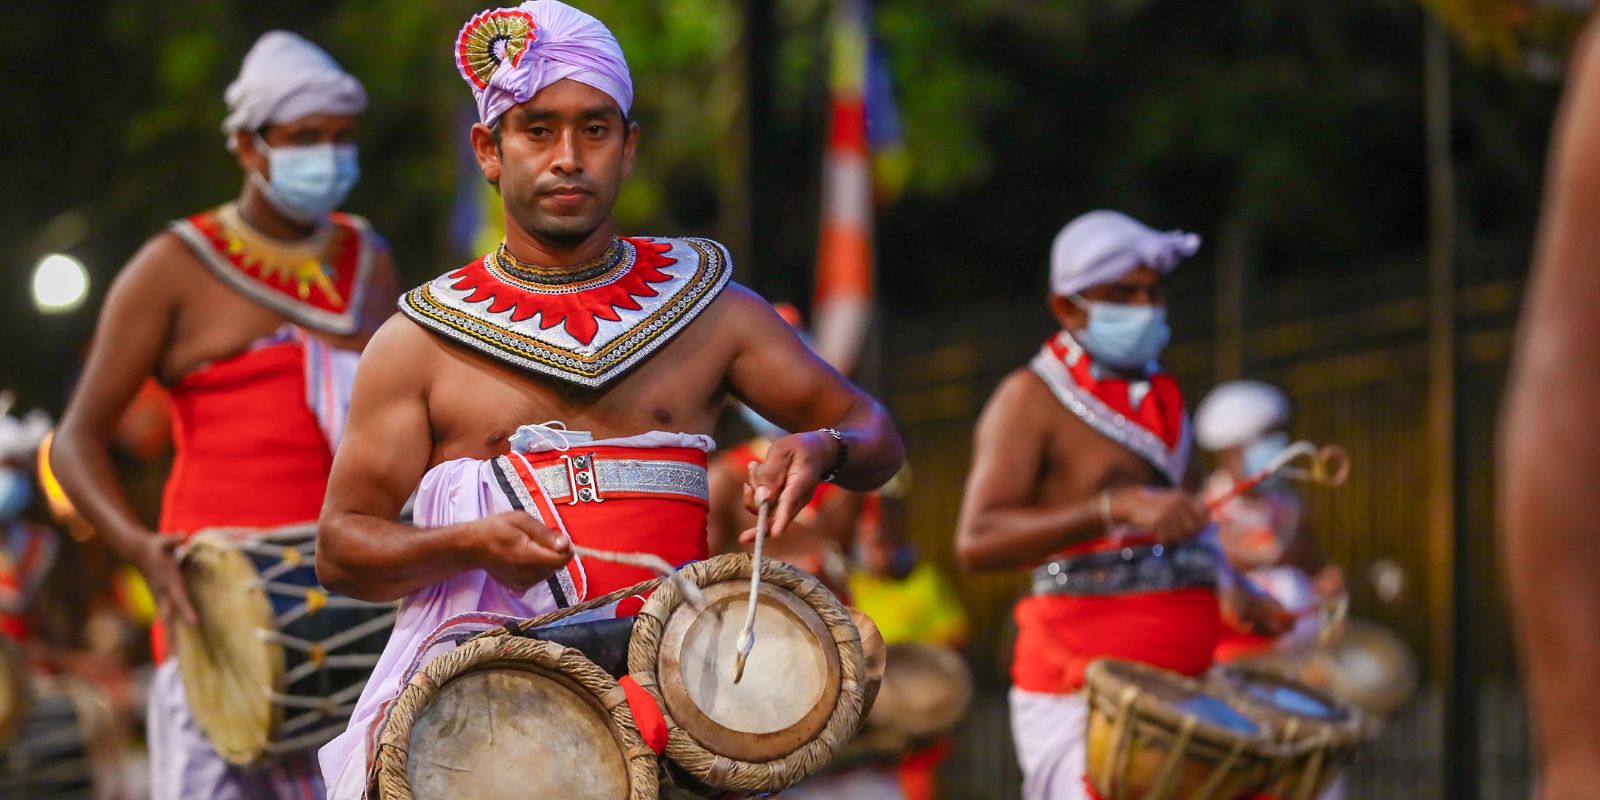 Traditional drummers performing during Kandy Esala Perahera